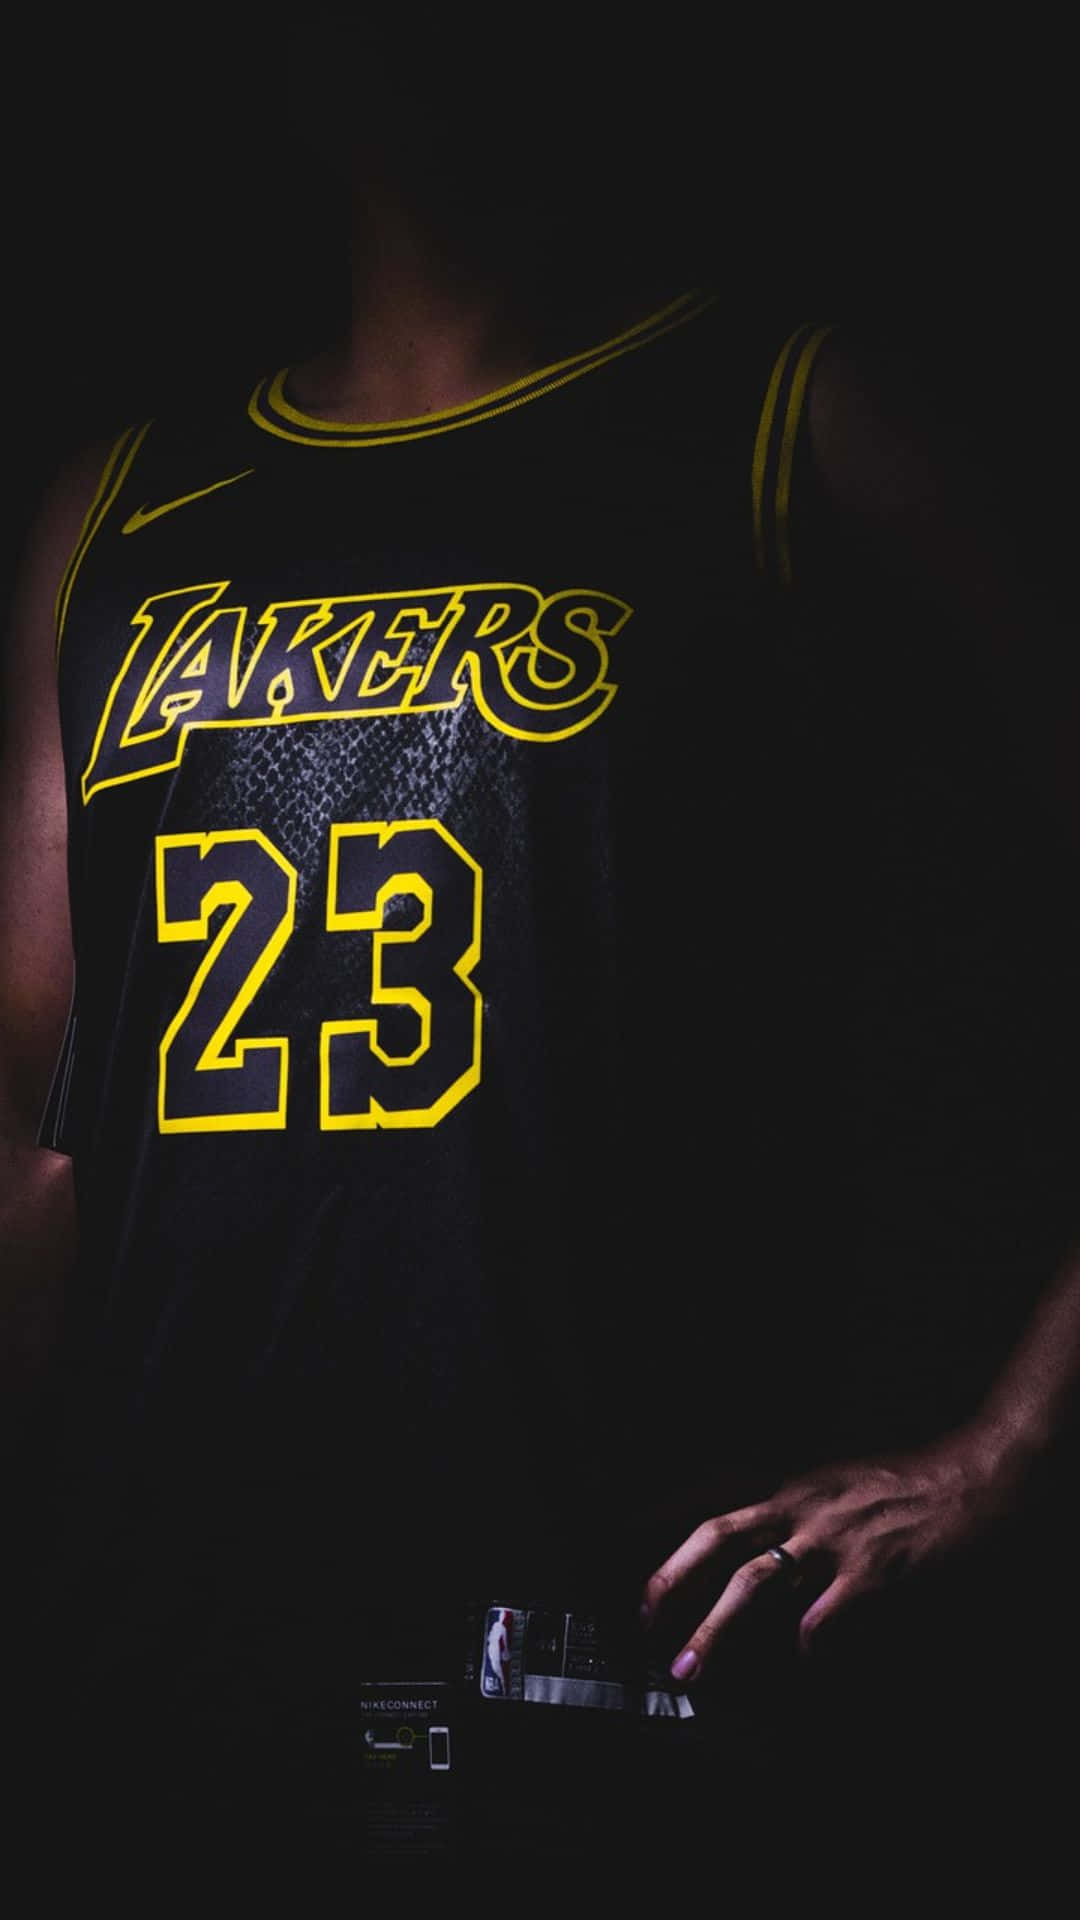 Lakers Jersey Number23 Dark Background Wallpaper